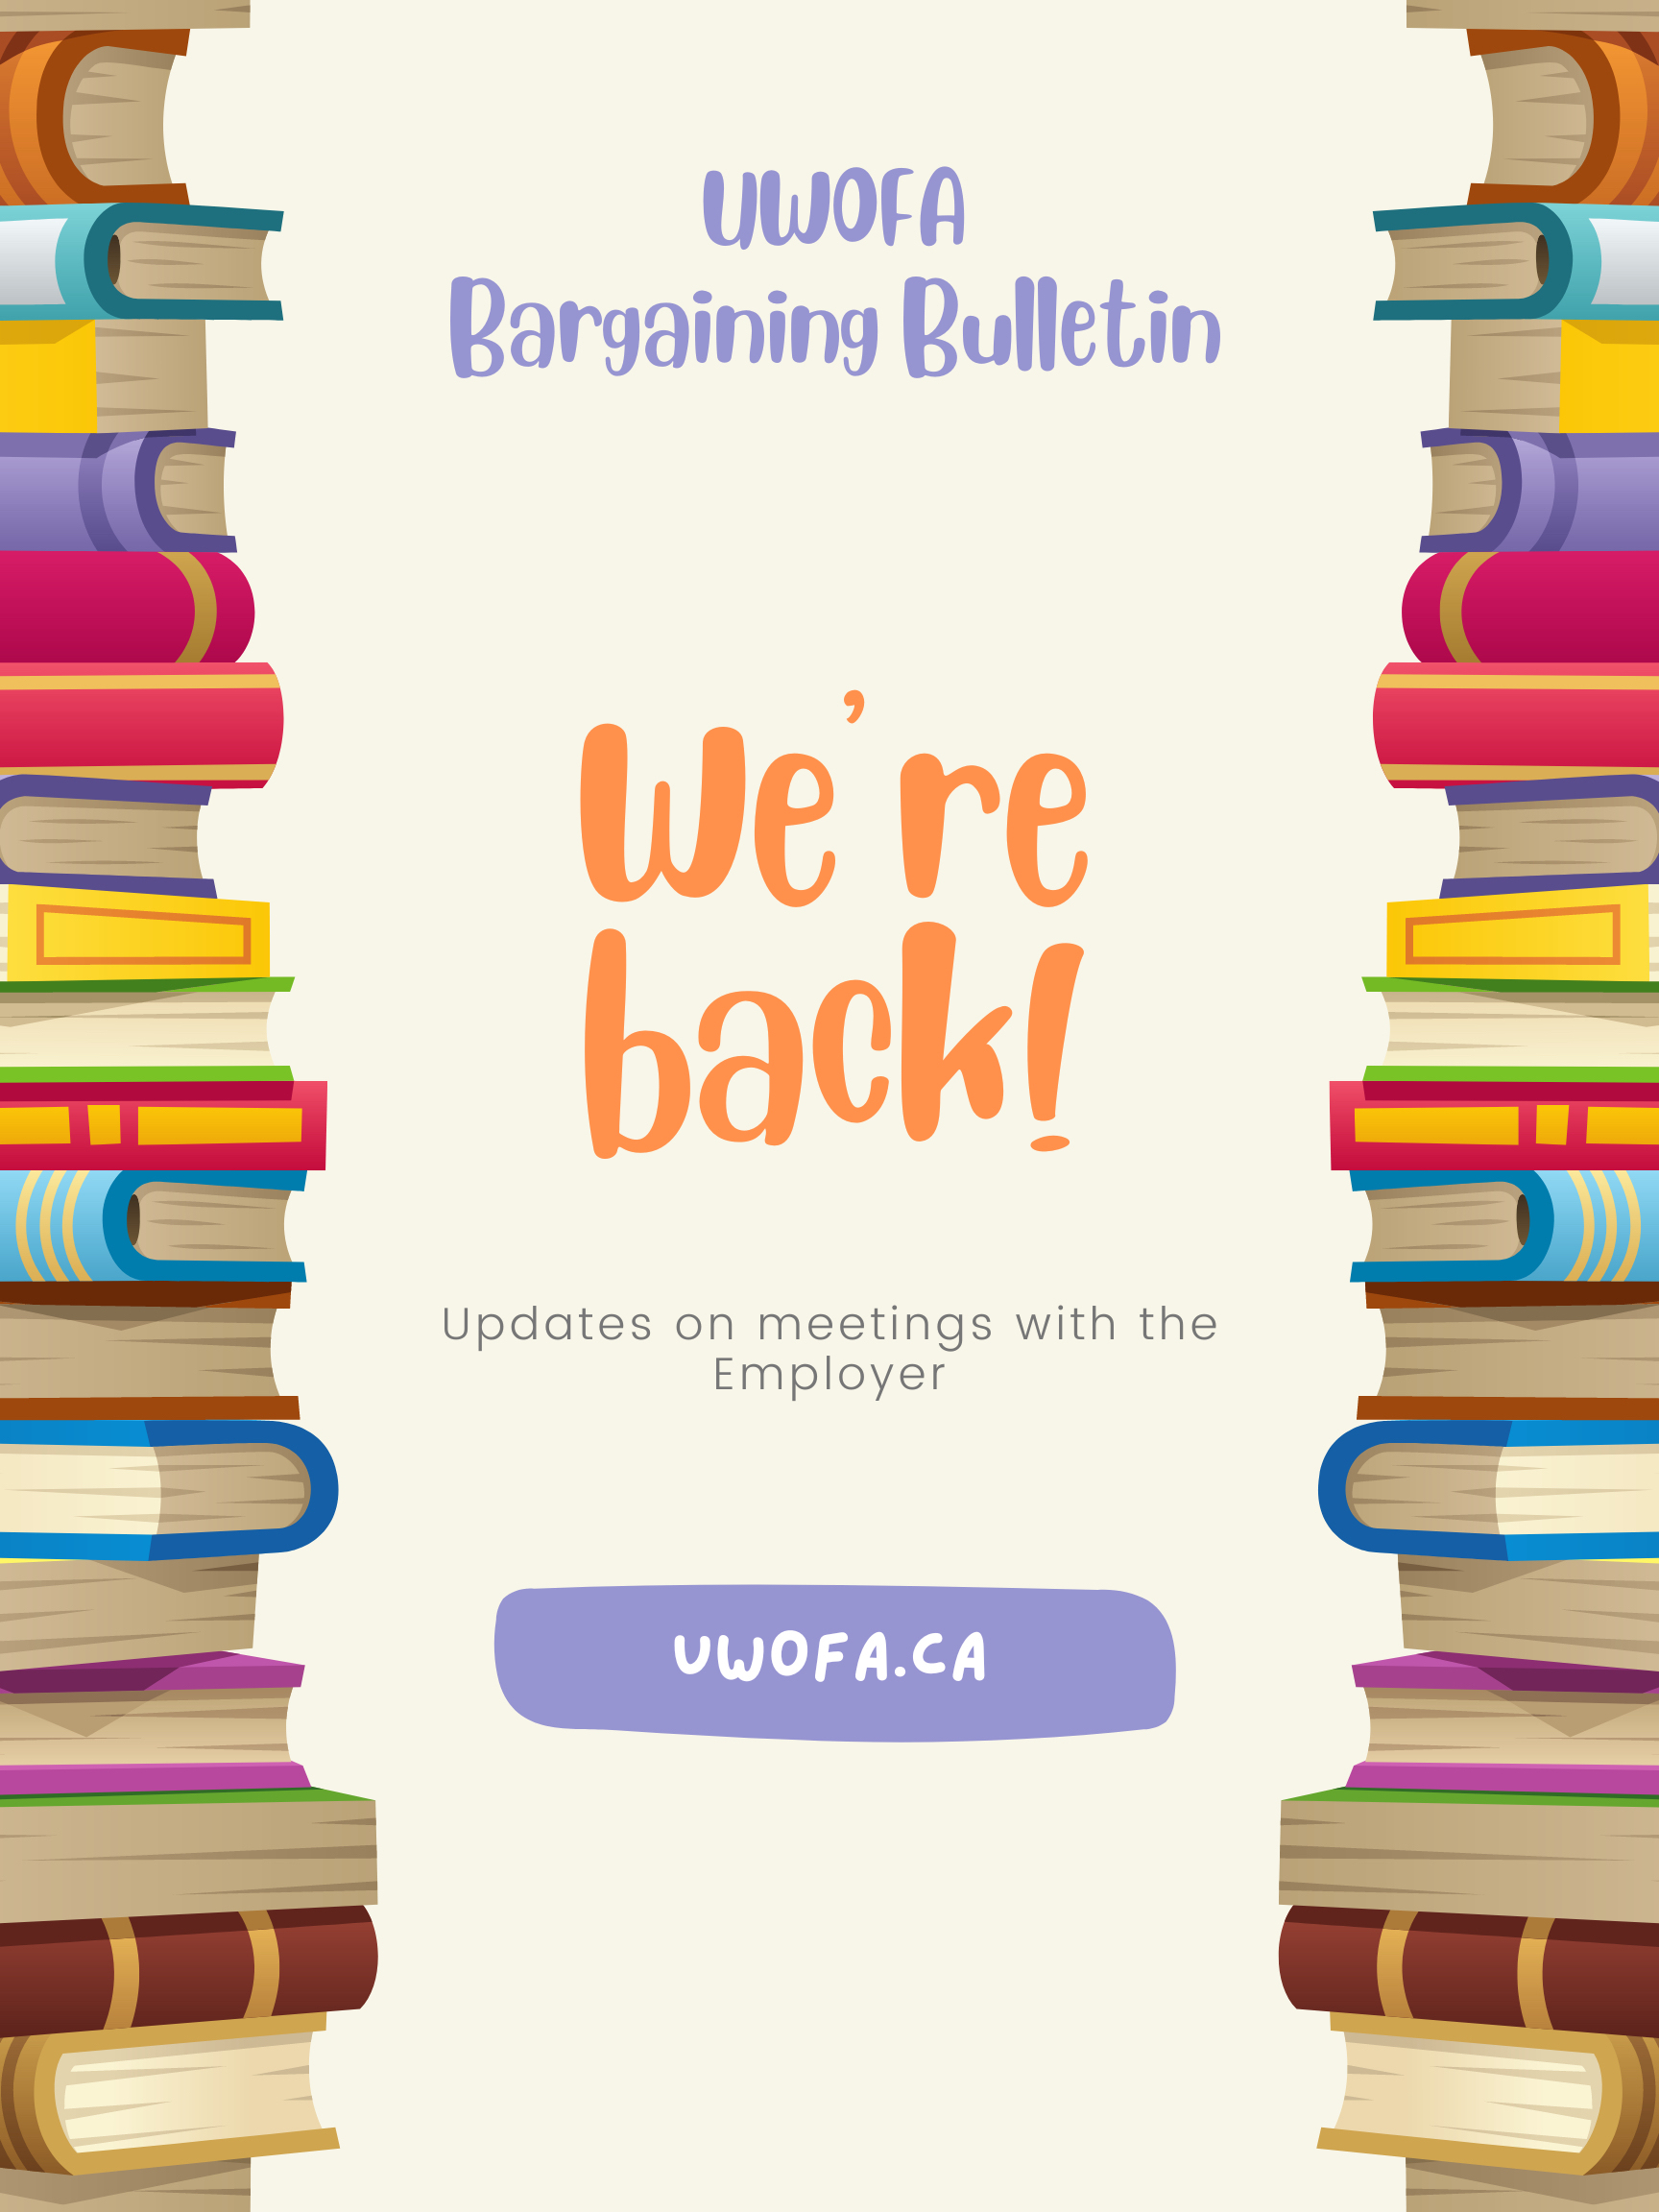 TEXT: UWOFA bargaining bulletin, We're back, Updates on meetings with the Employer, uwofa.ca, image: books stacked